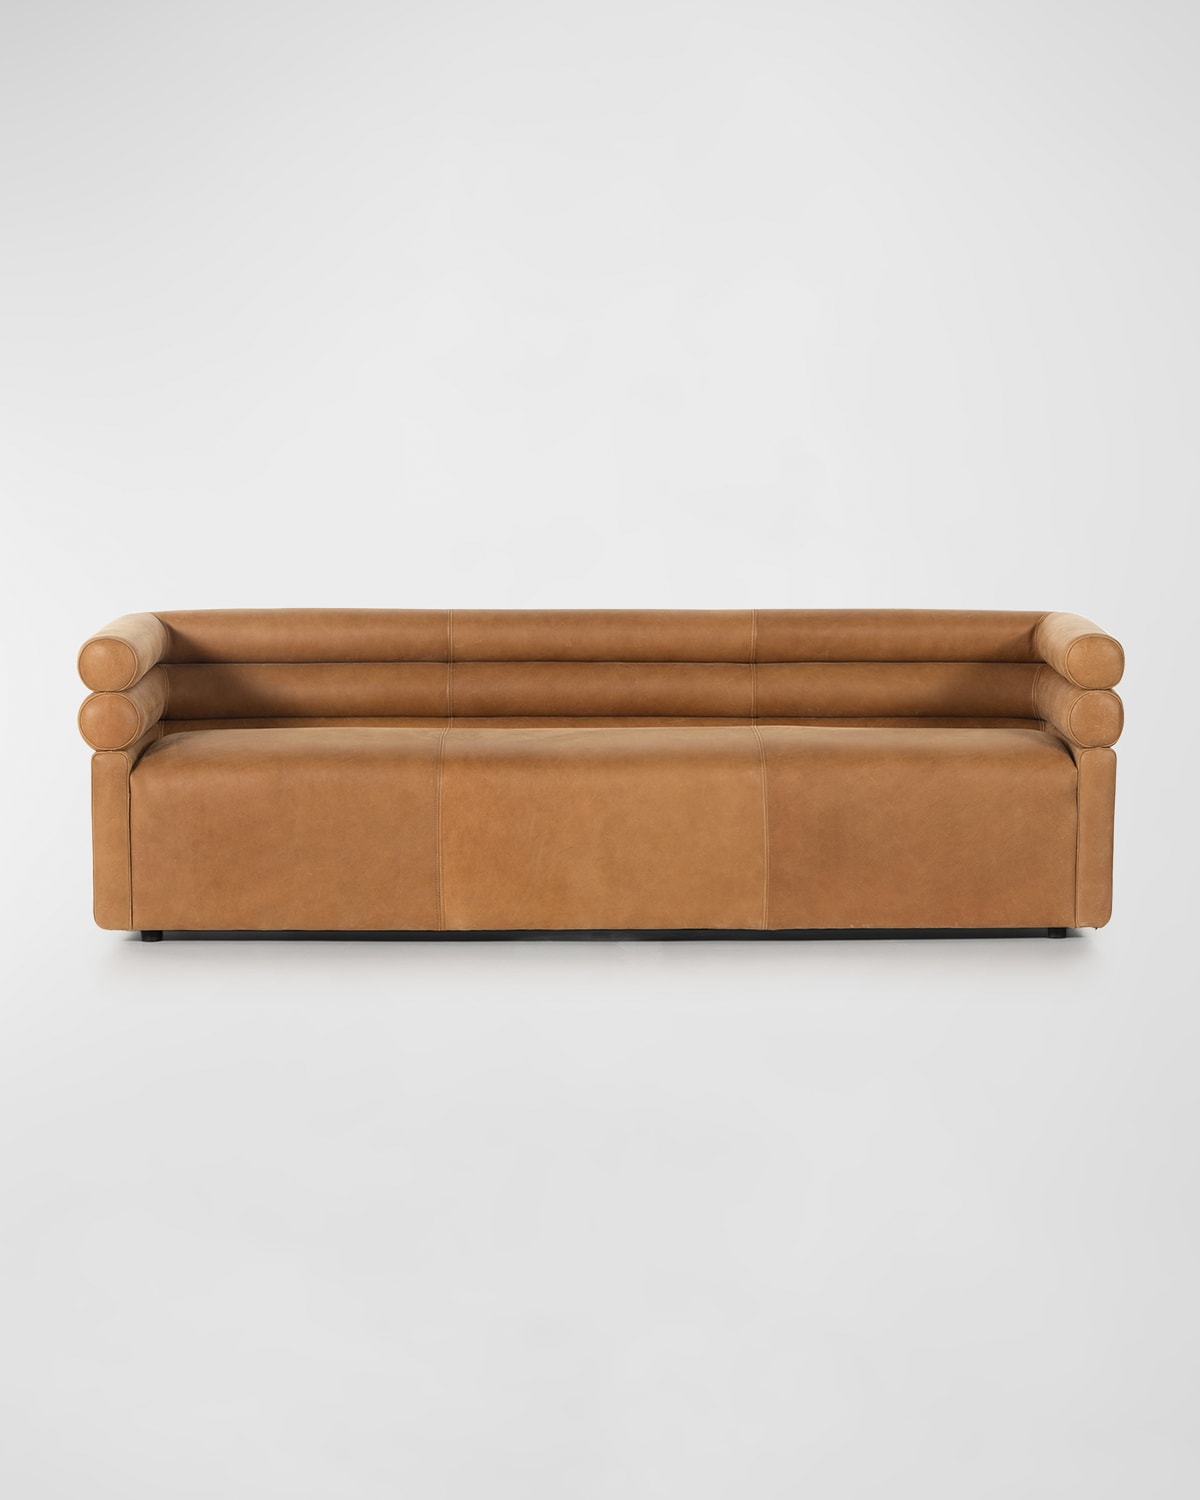 Evie Leather Sofa, 88.5"